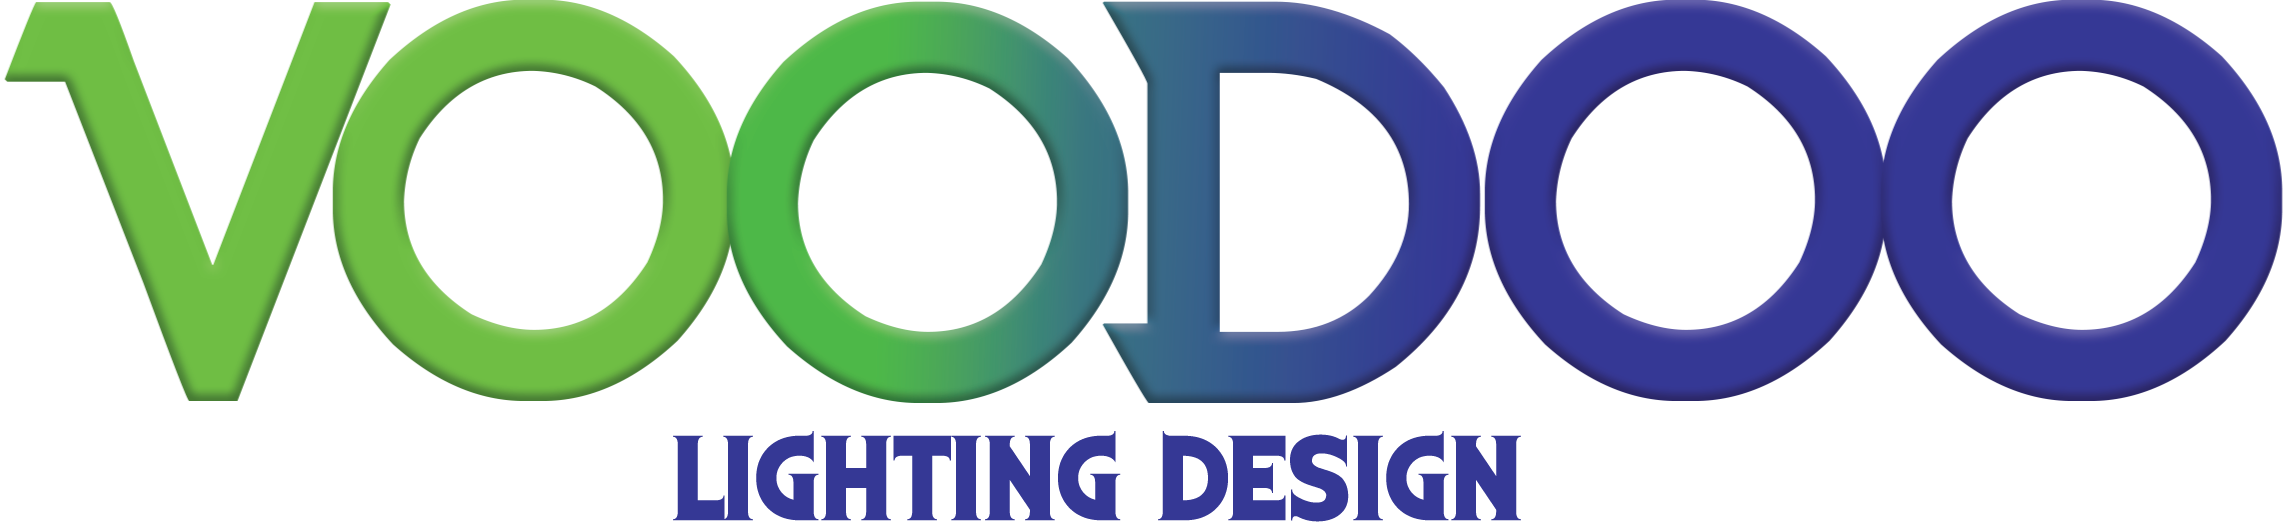 Voodoo Lighting Design Logo with Tagline